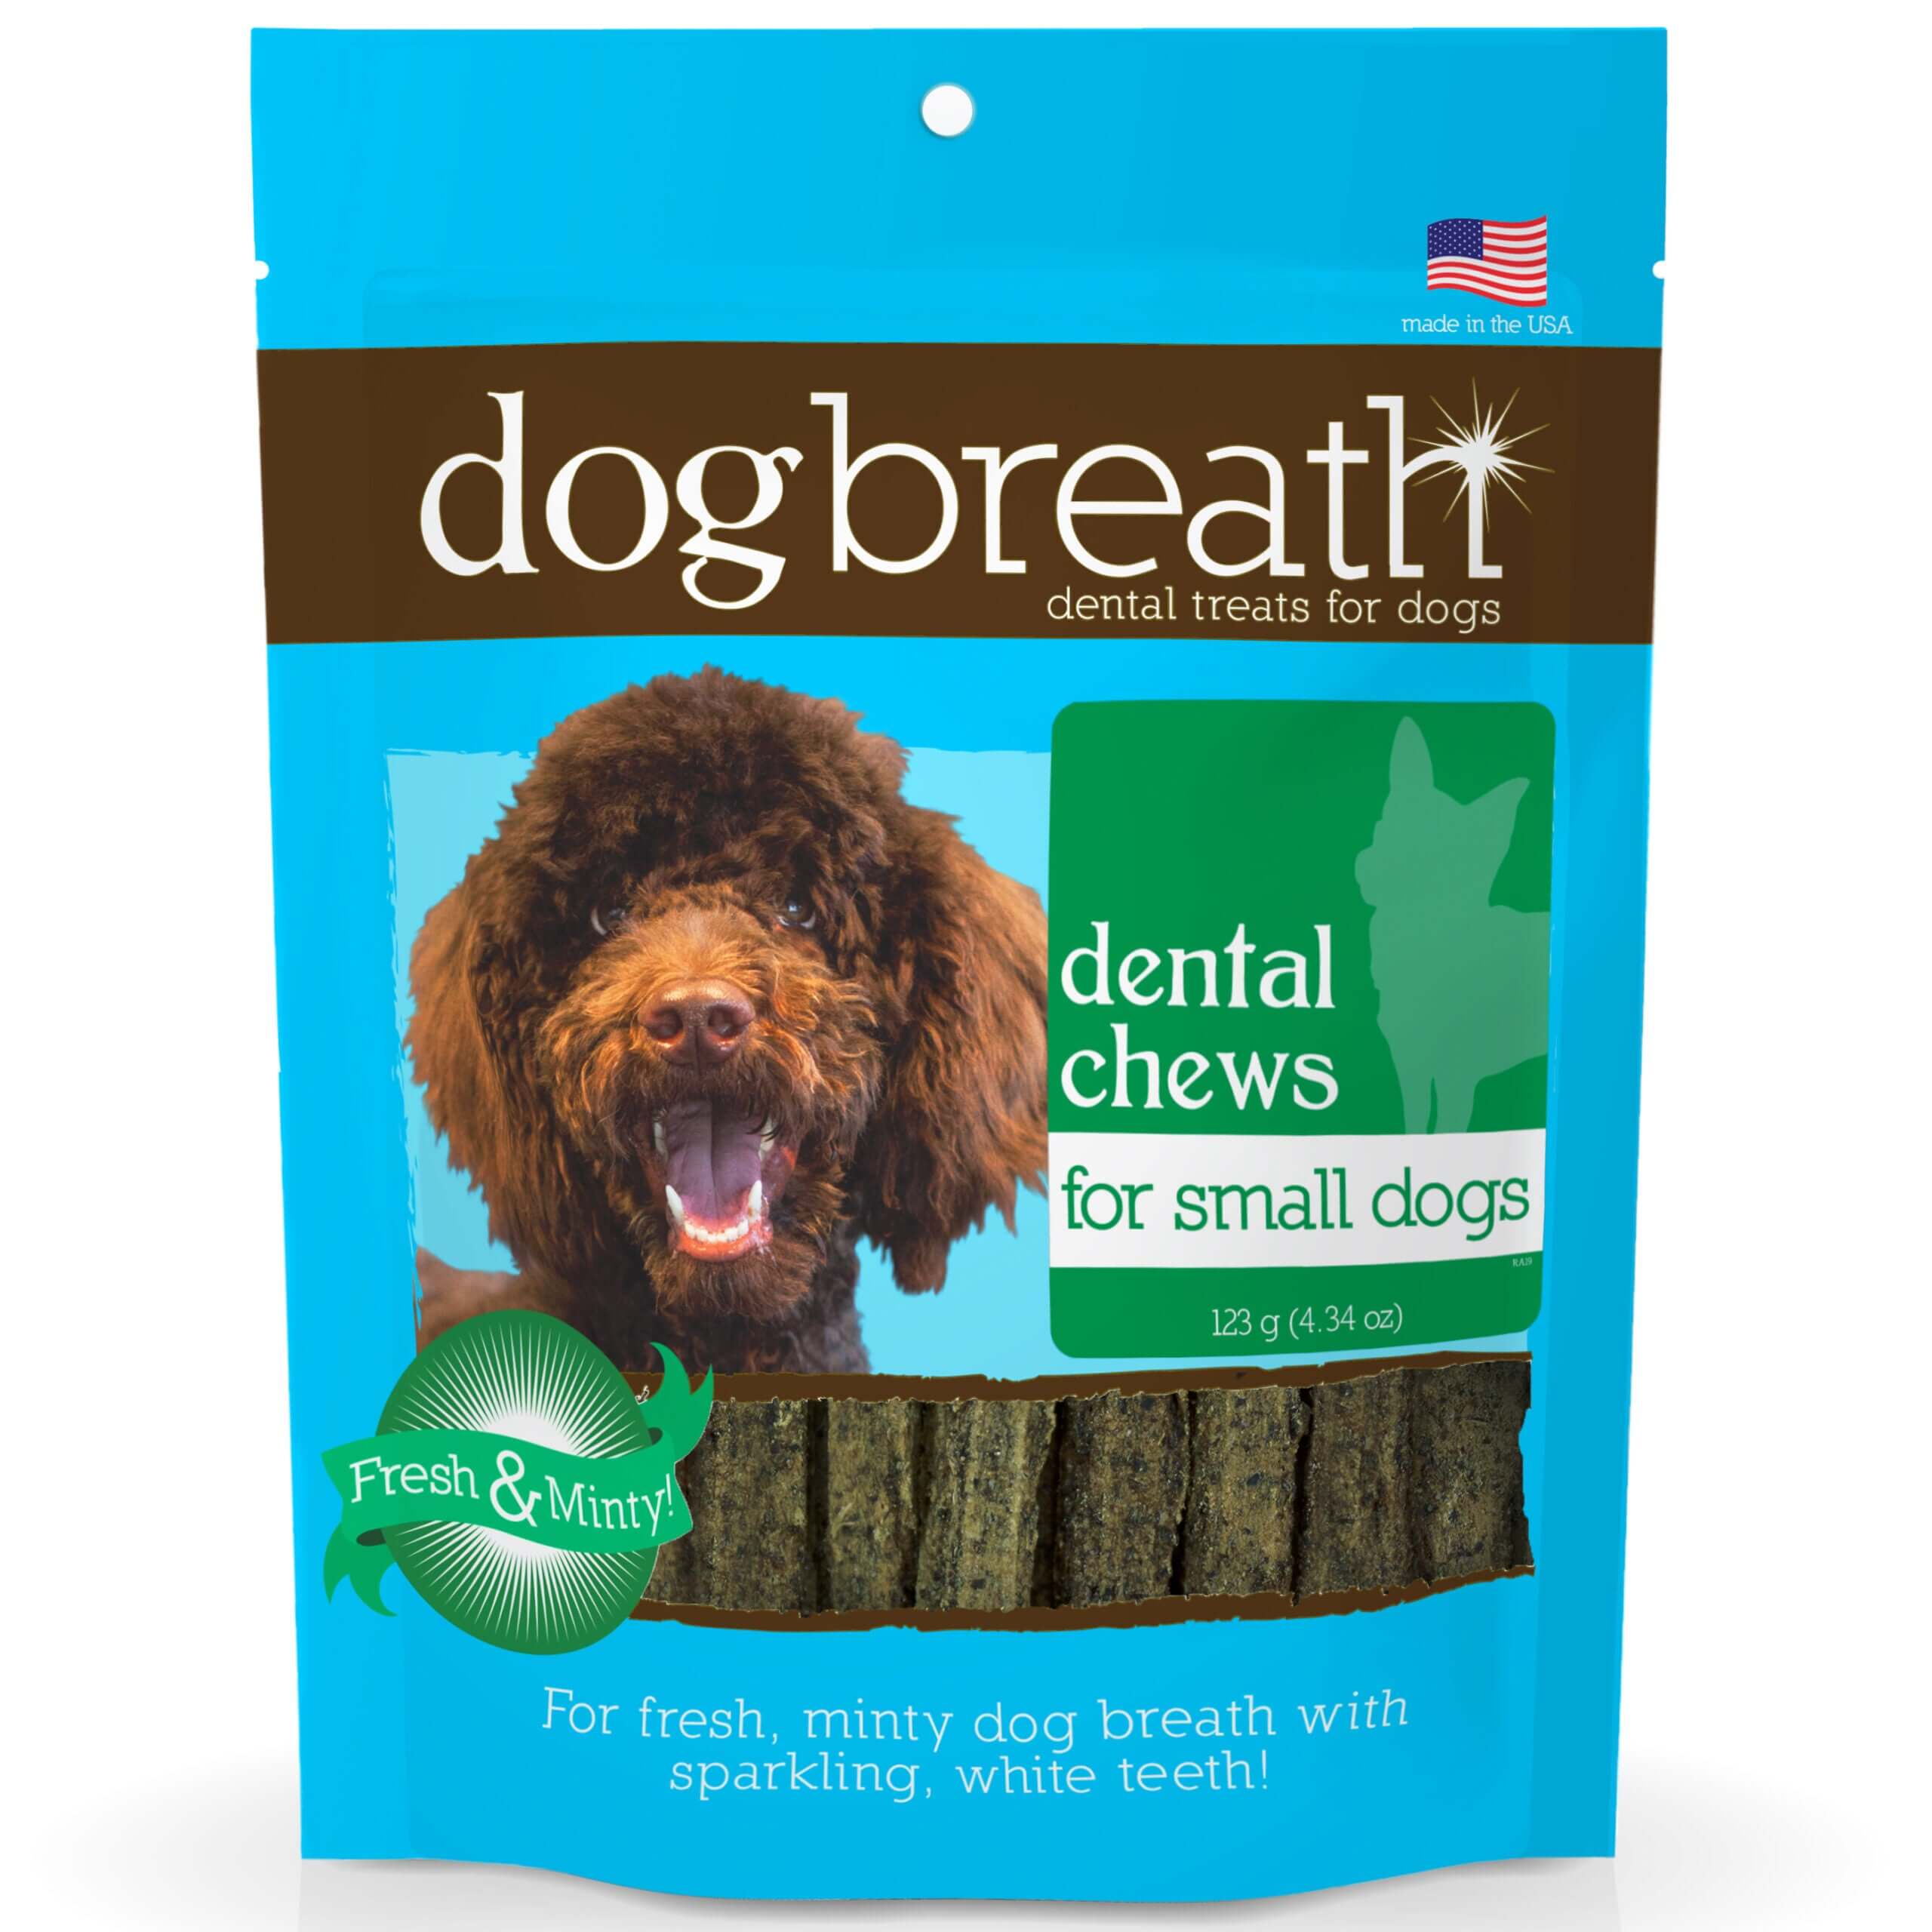 Herbsmith Dog Breath Dental Chews for Dogs